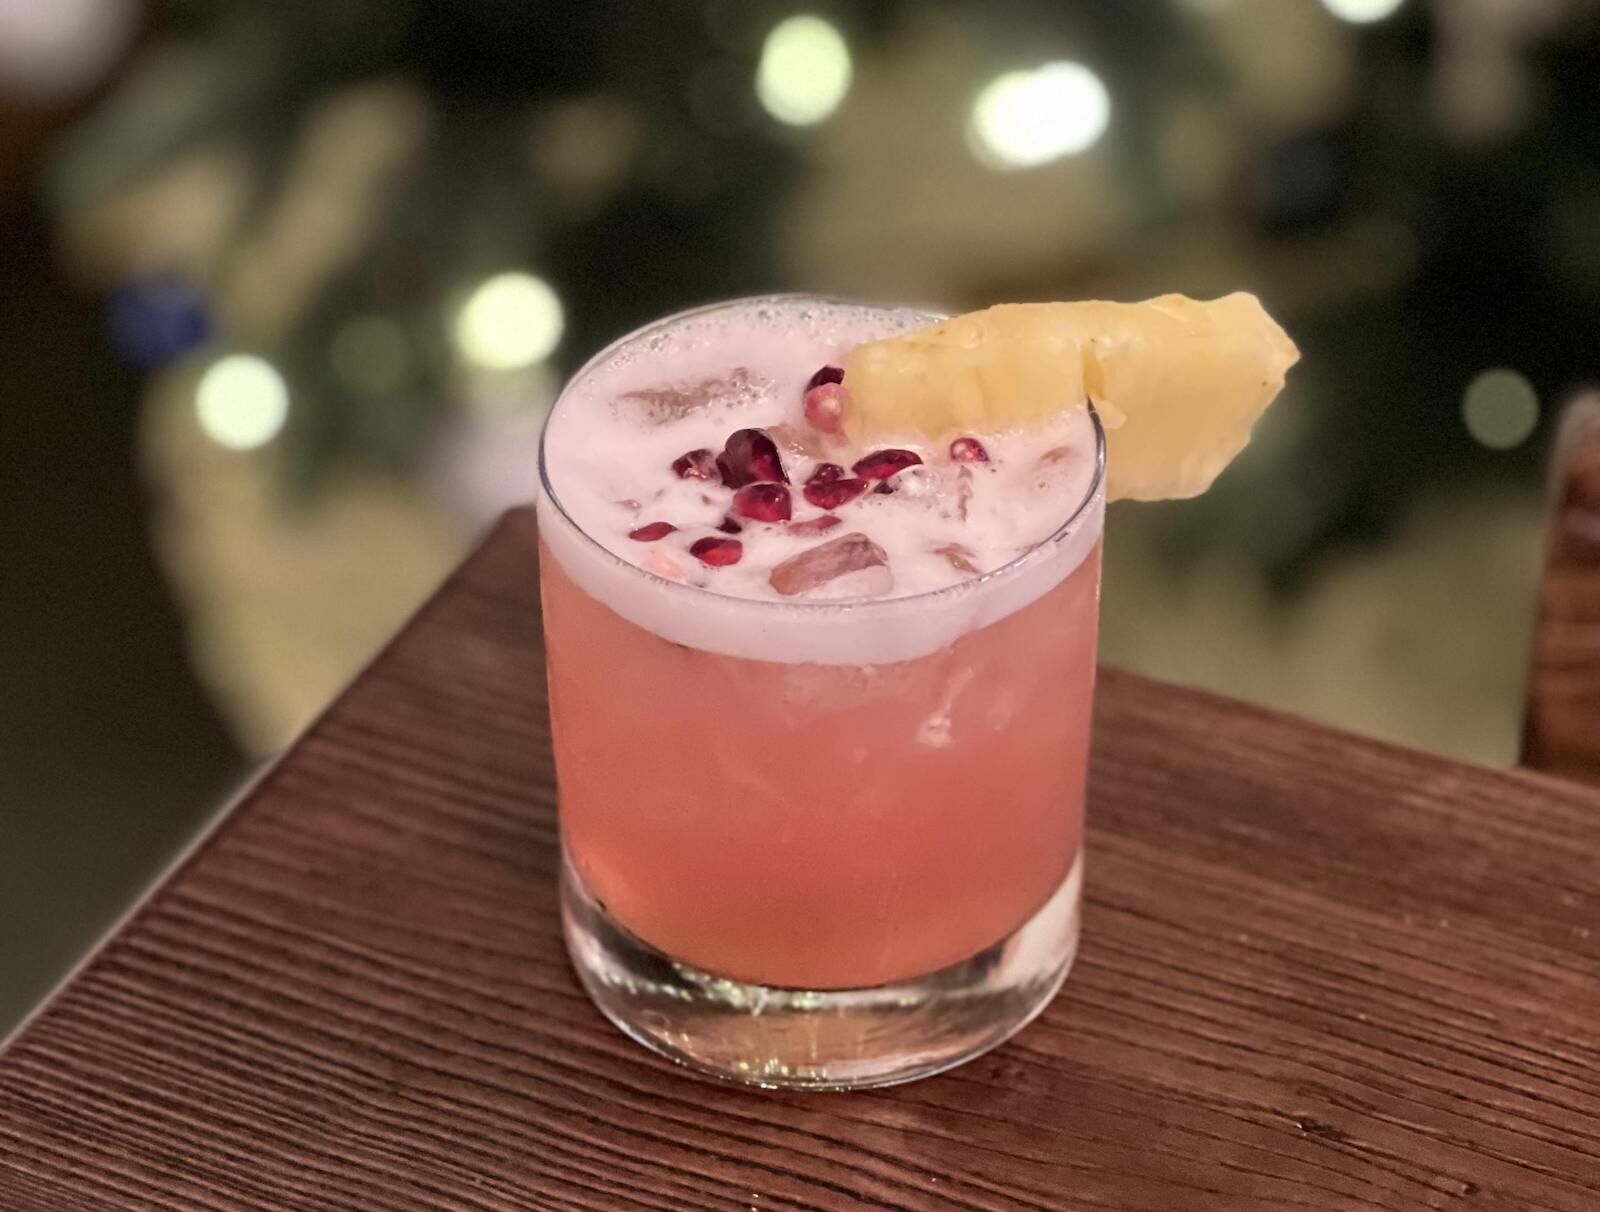 A tasty cocktail from New Smyrna BEach's Sugar Works Distillery